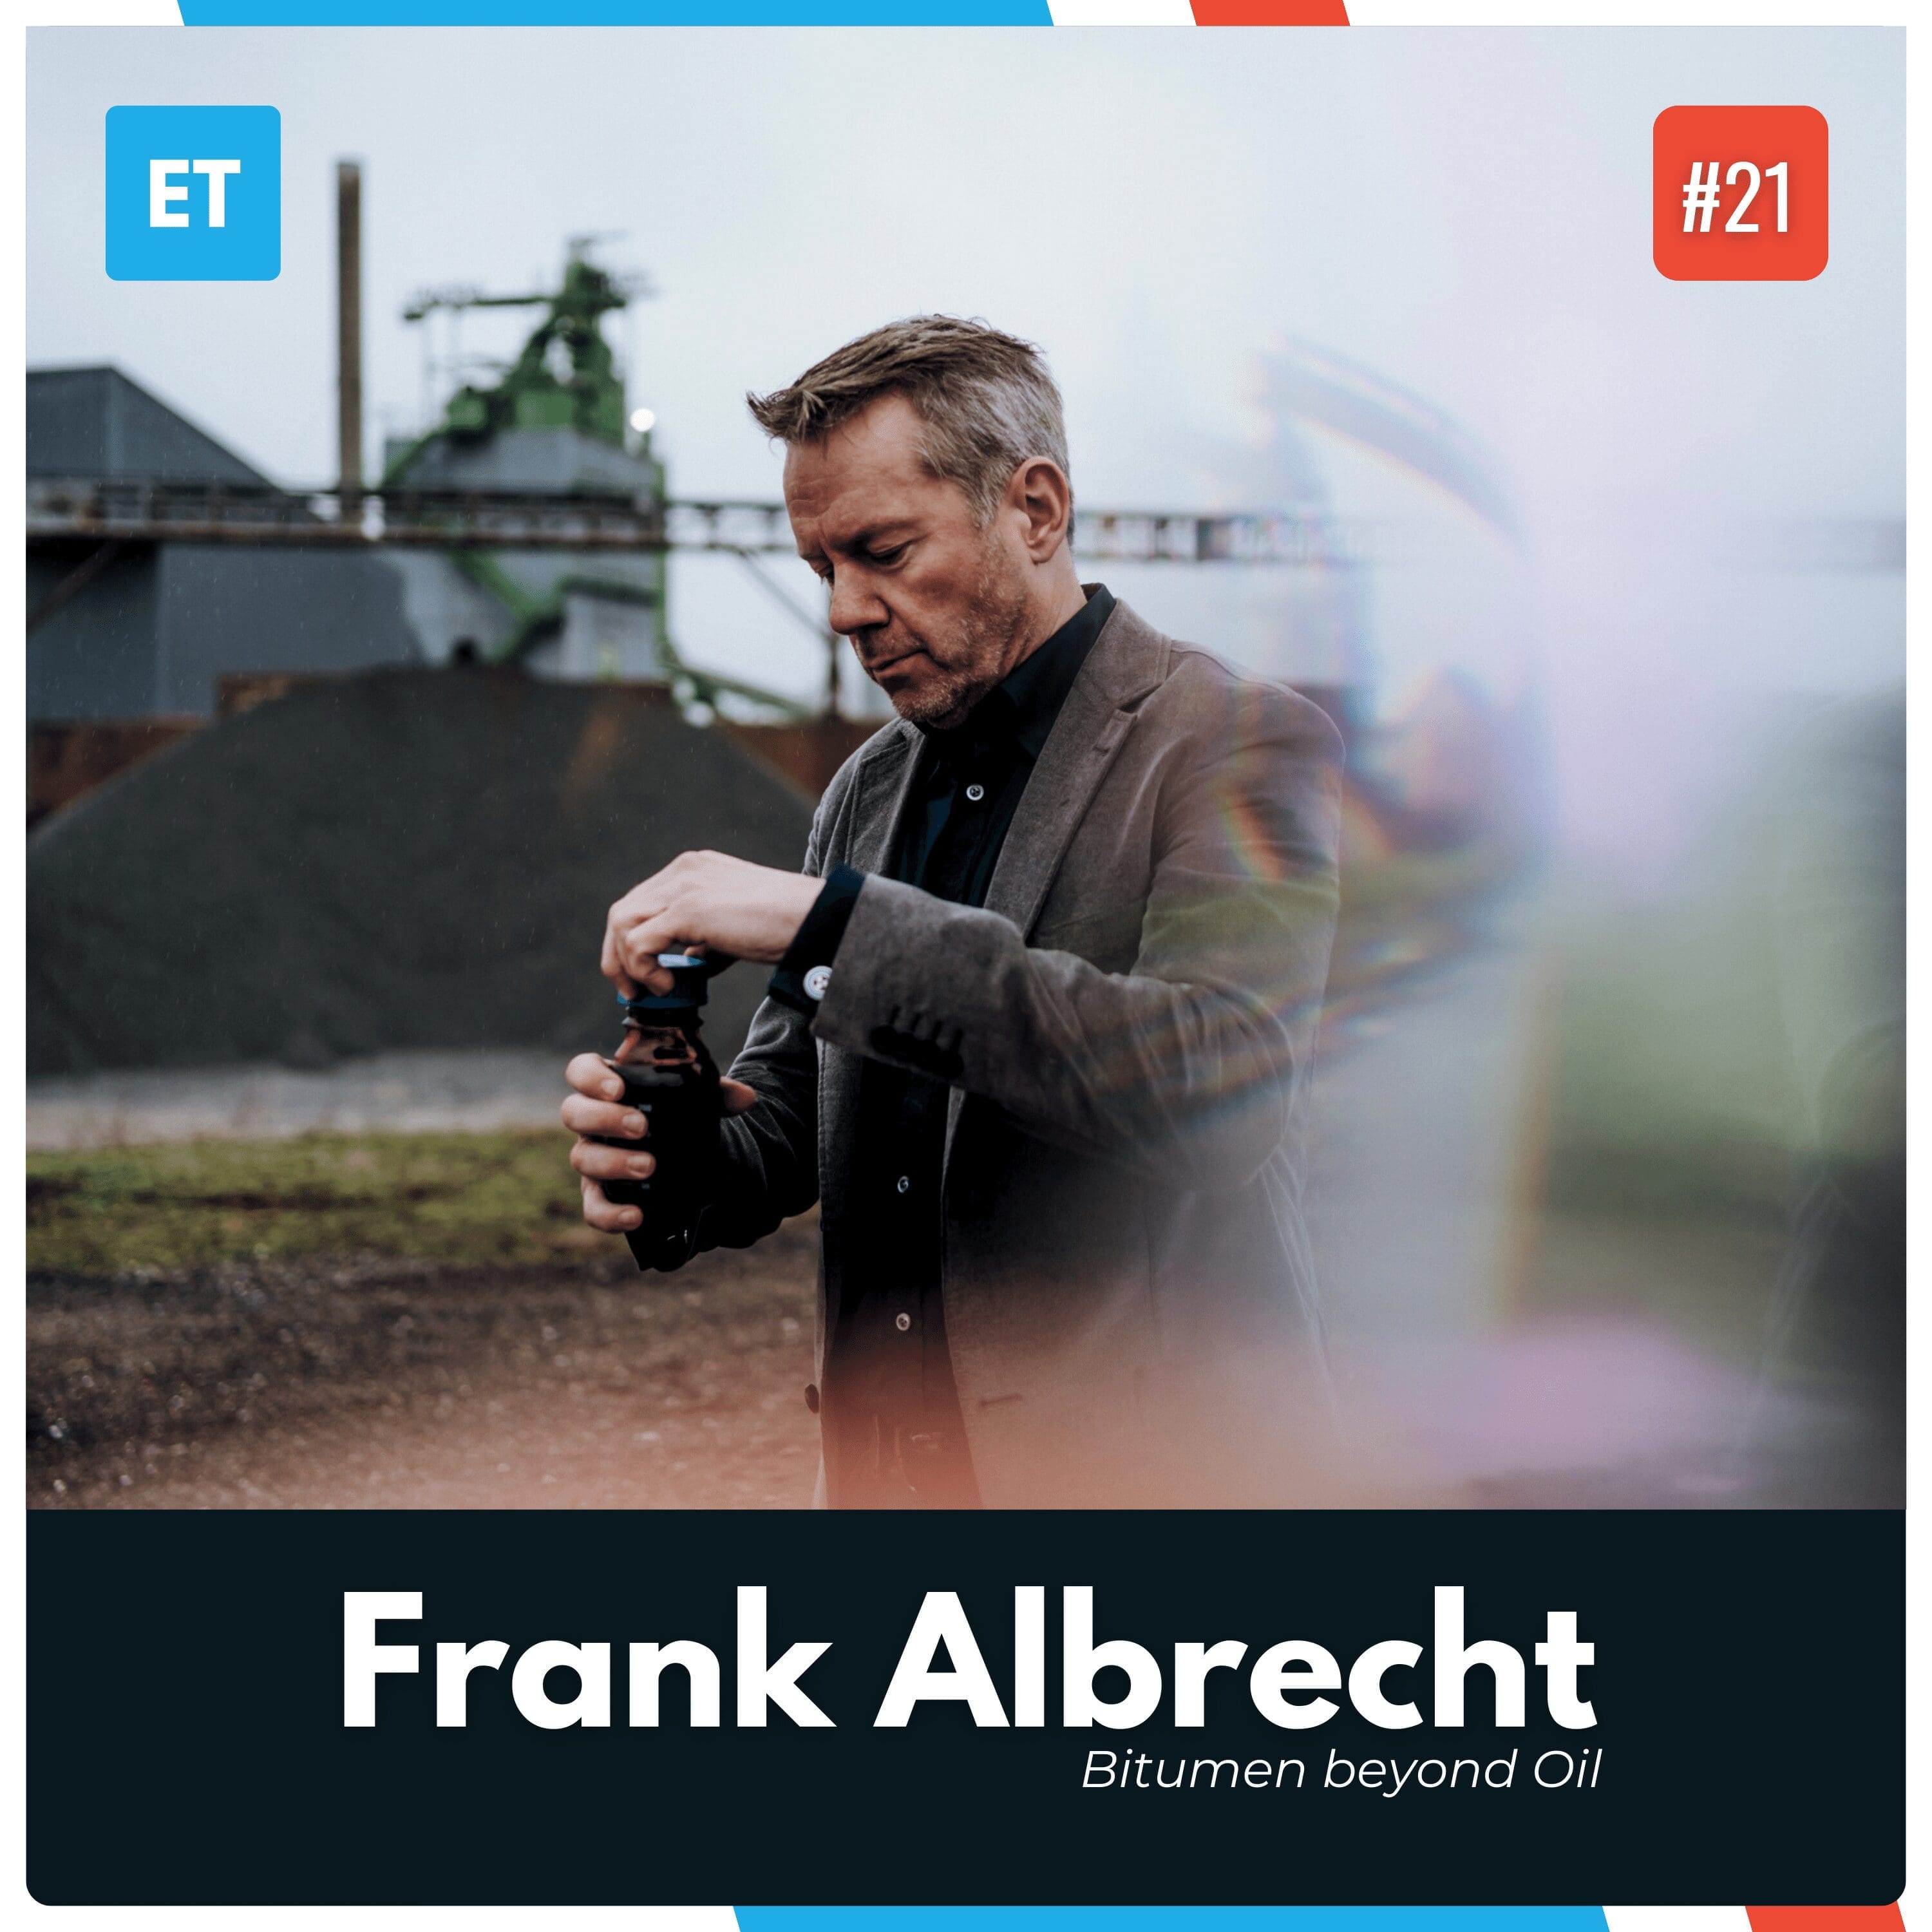 Frank Albrecht ist zu Gast im Exciting Tech Podcast